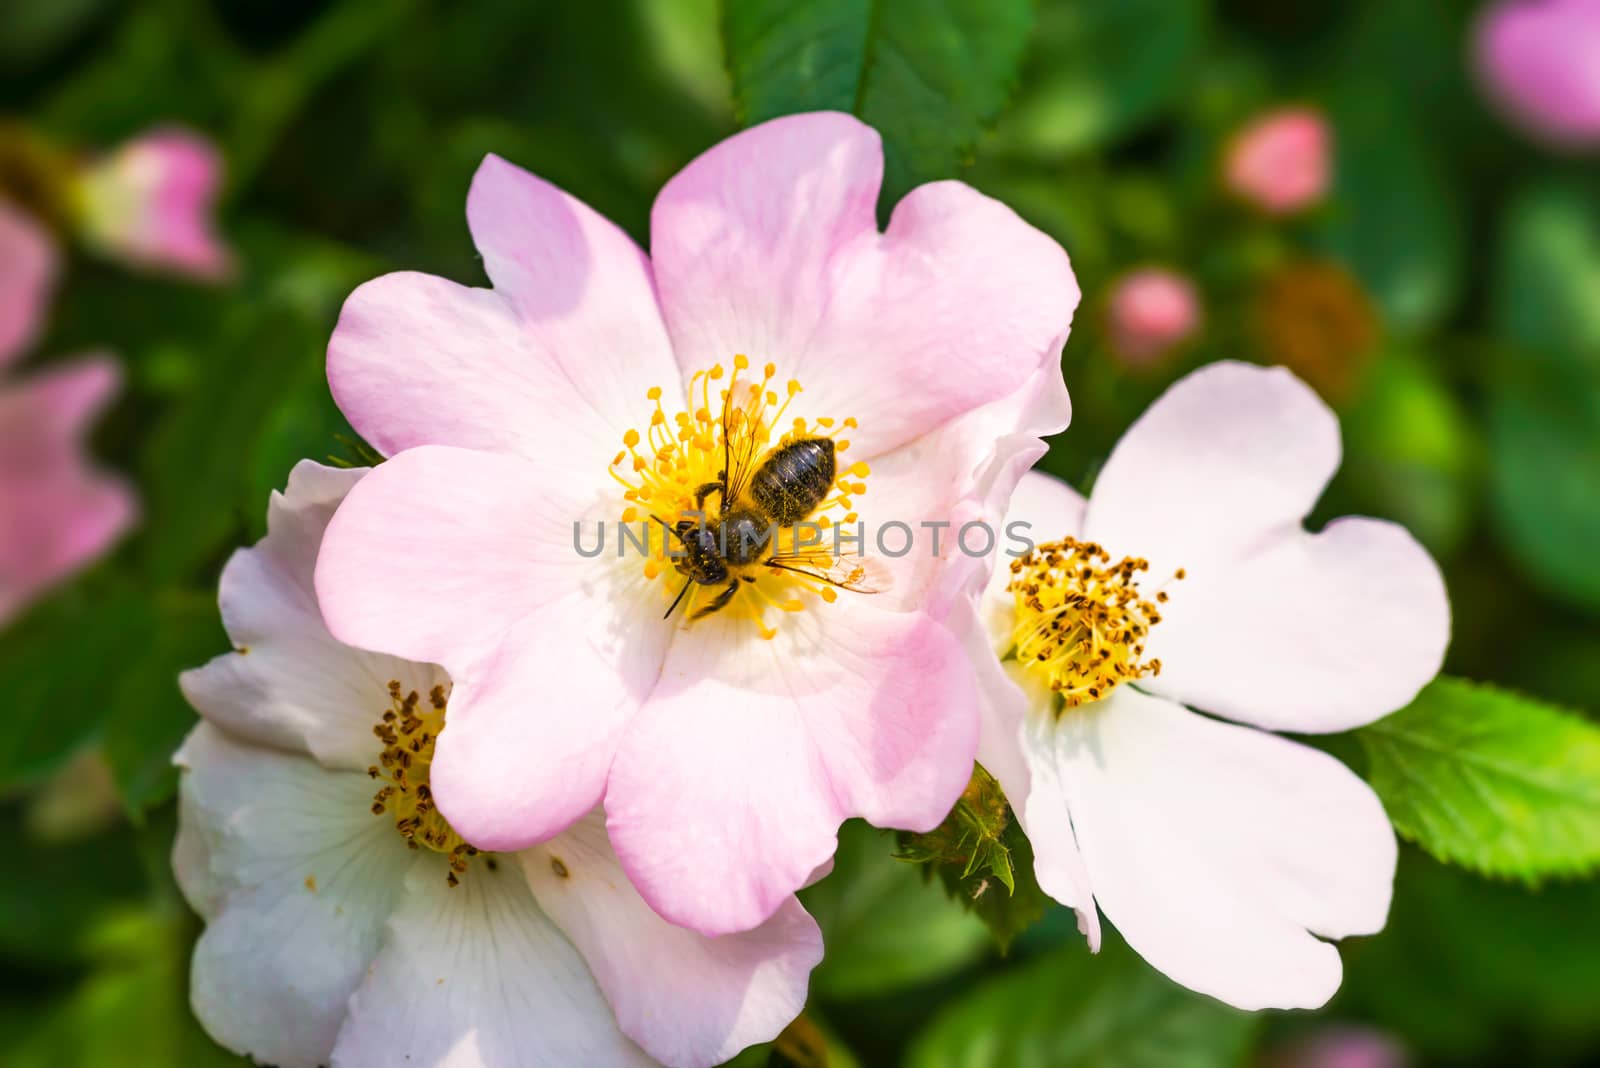 Eglantine and Bee by MaxalTamor